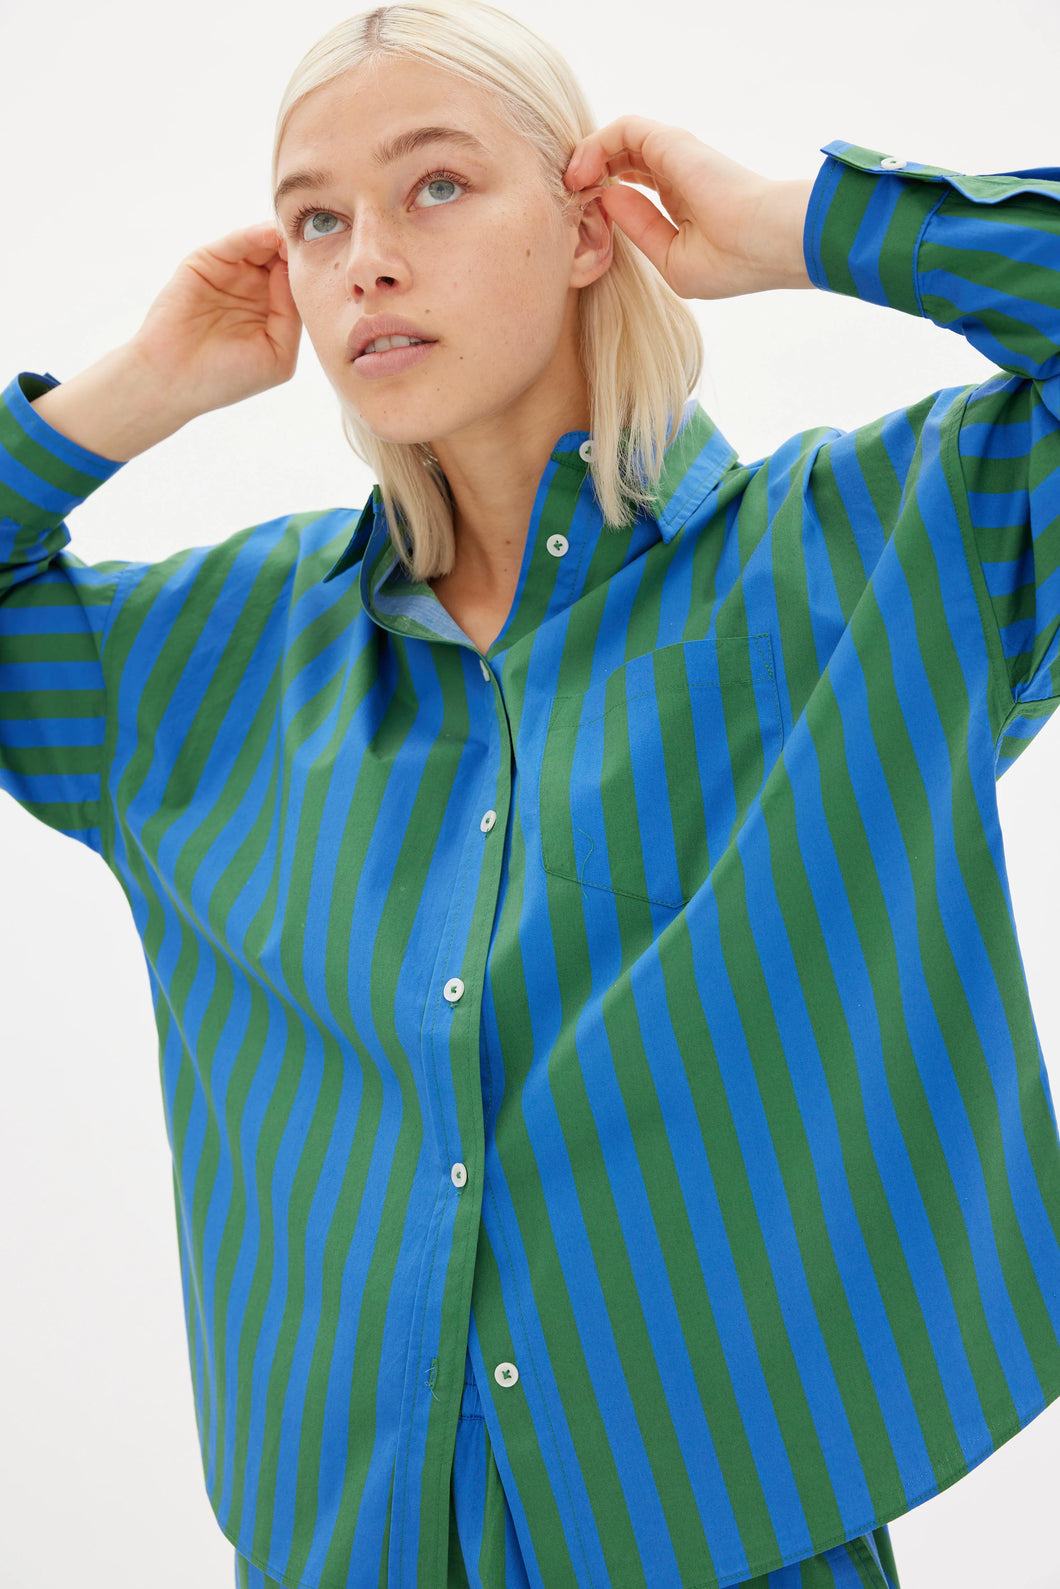 Chiara Classic Stripe Shirt in Dusk/Forest by LMND